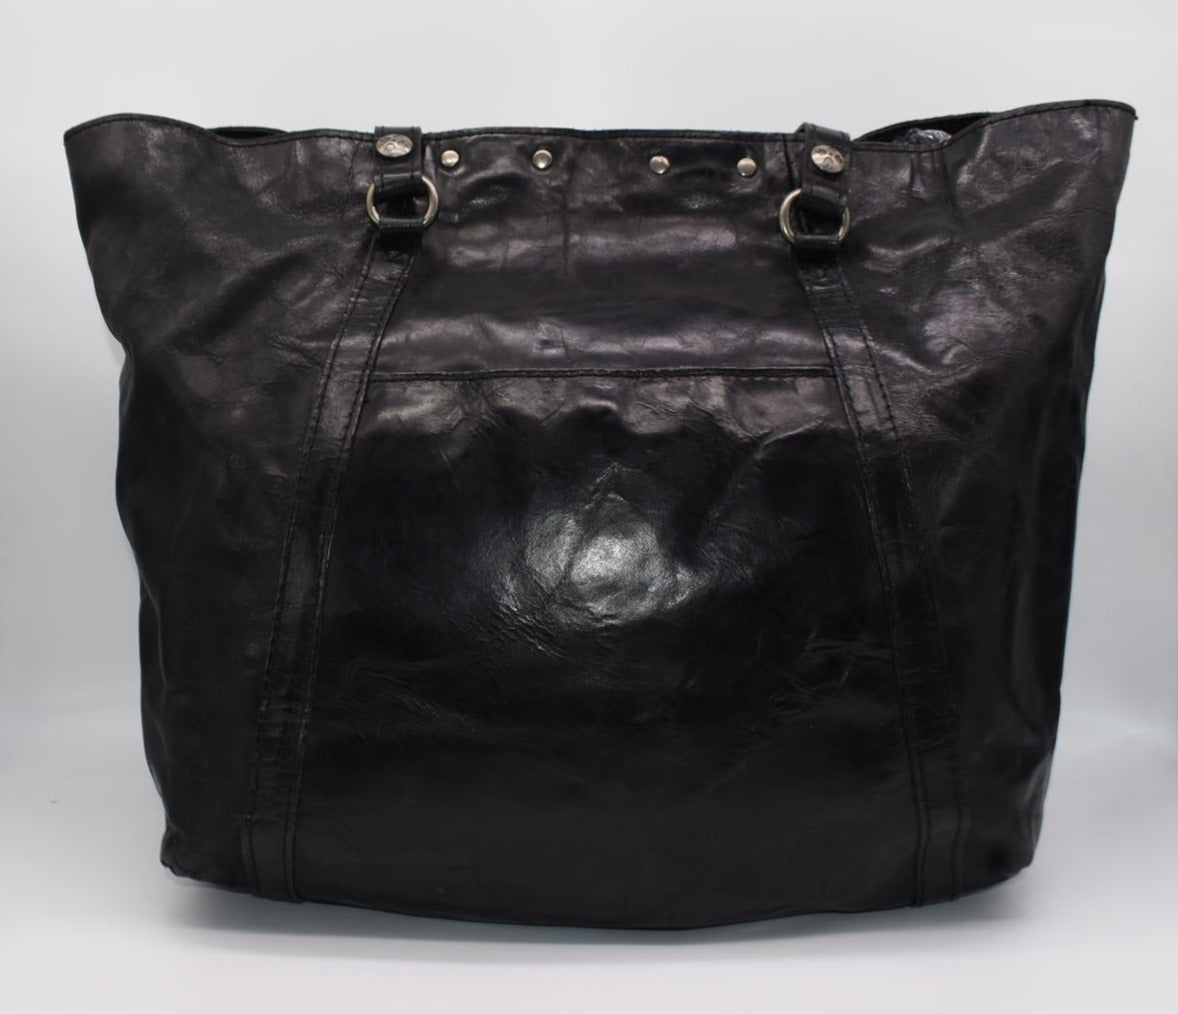 Patricia Nash Benvenuto Tote Bag in Distressed Black